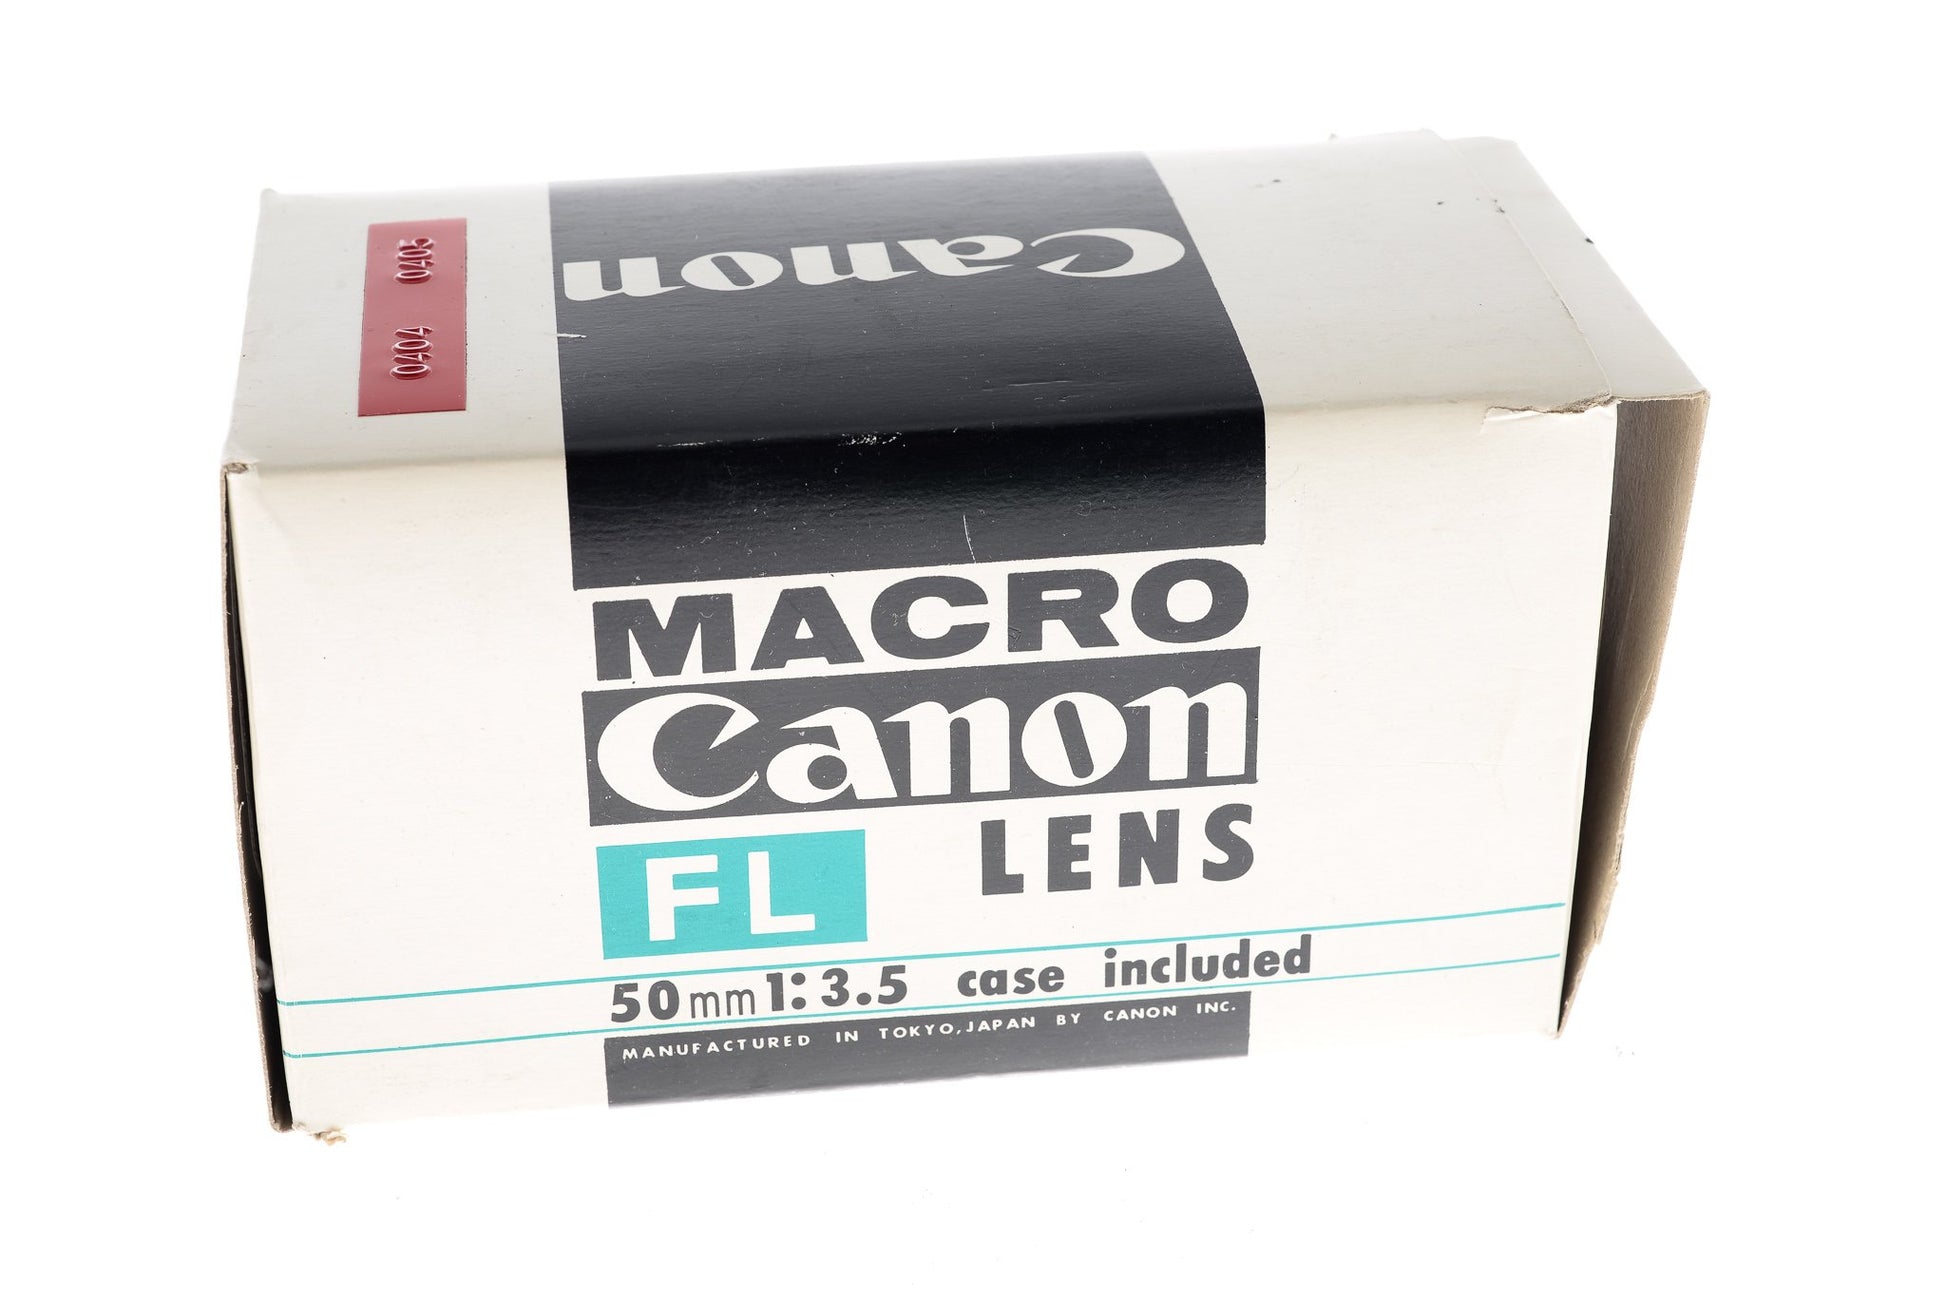 Canon 50mm f3.5 FL Macro - Lens